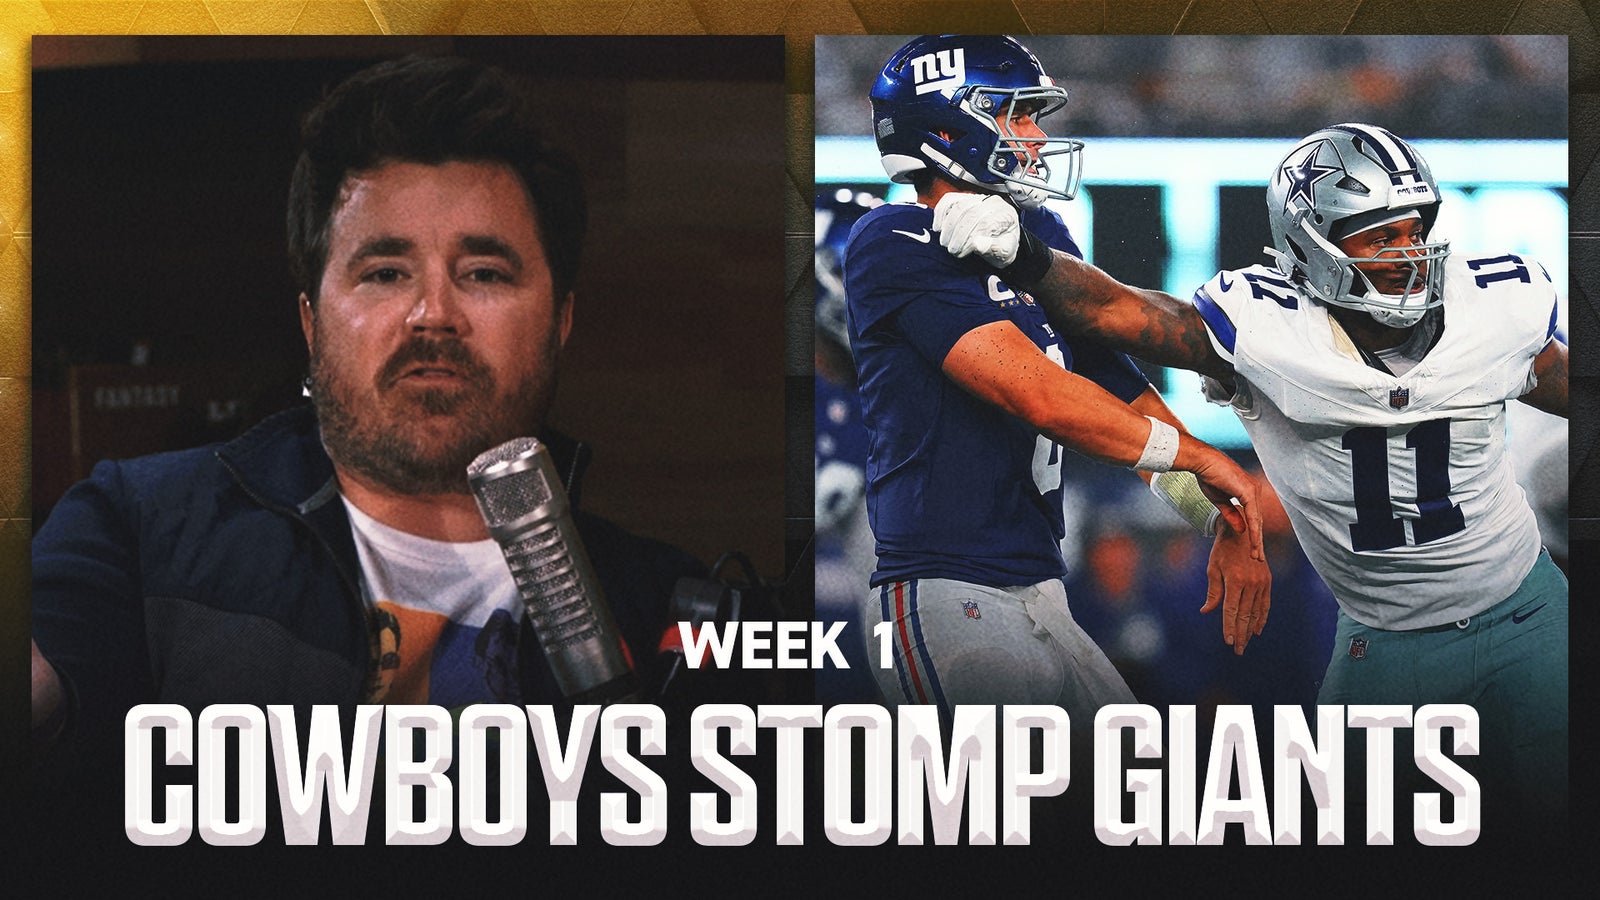 Dave Helman discusses Dak Prescott, Cowboys defense in CRUSHING win over Giants